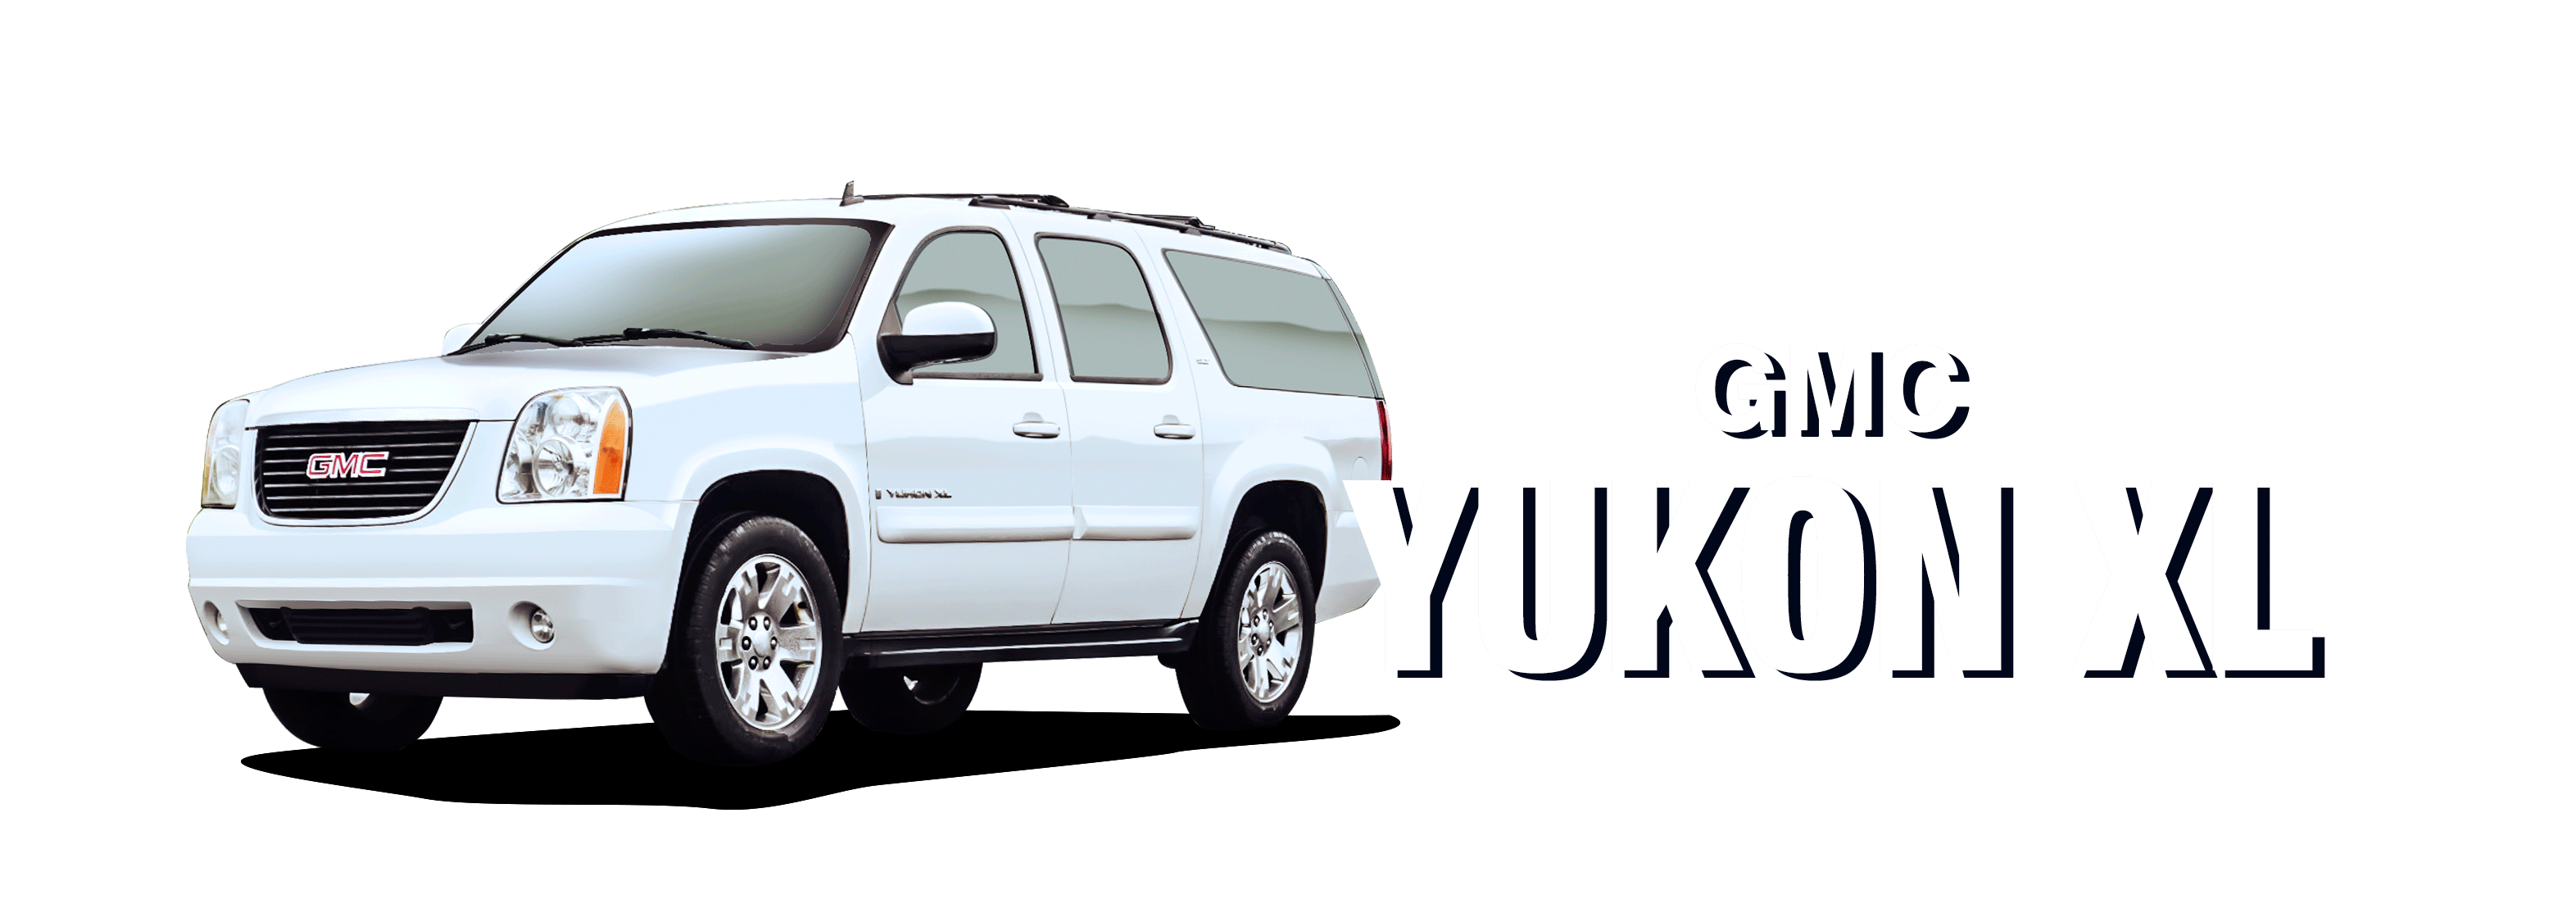 GMC-YukonXL-vehicle-desktop